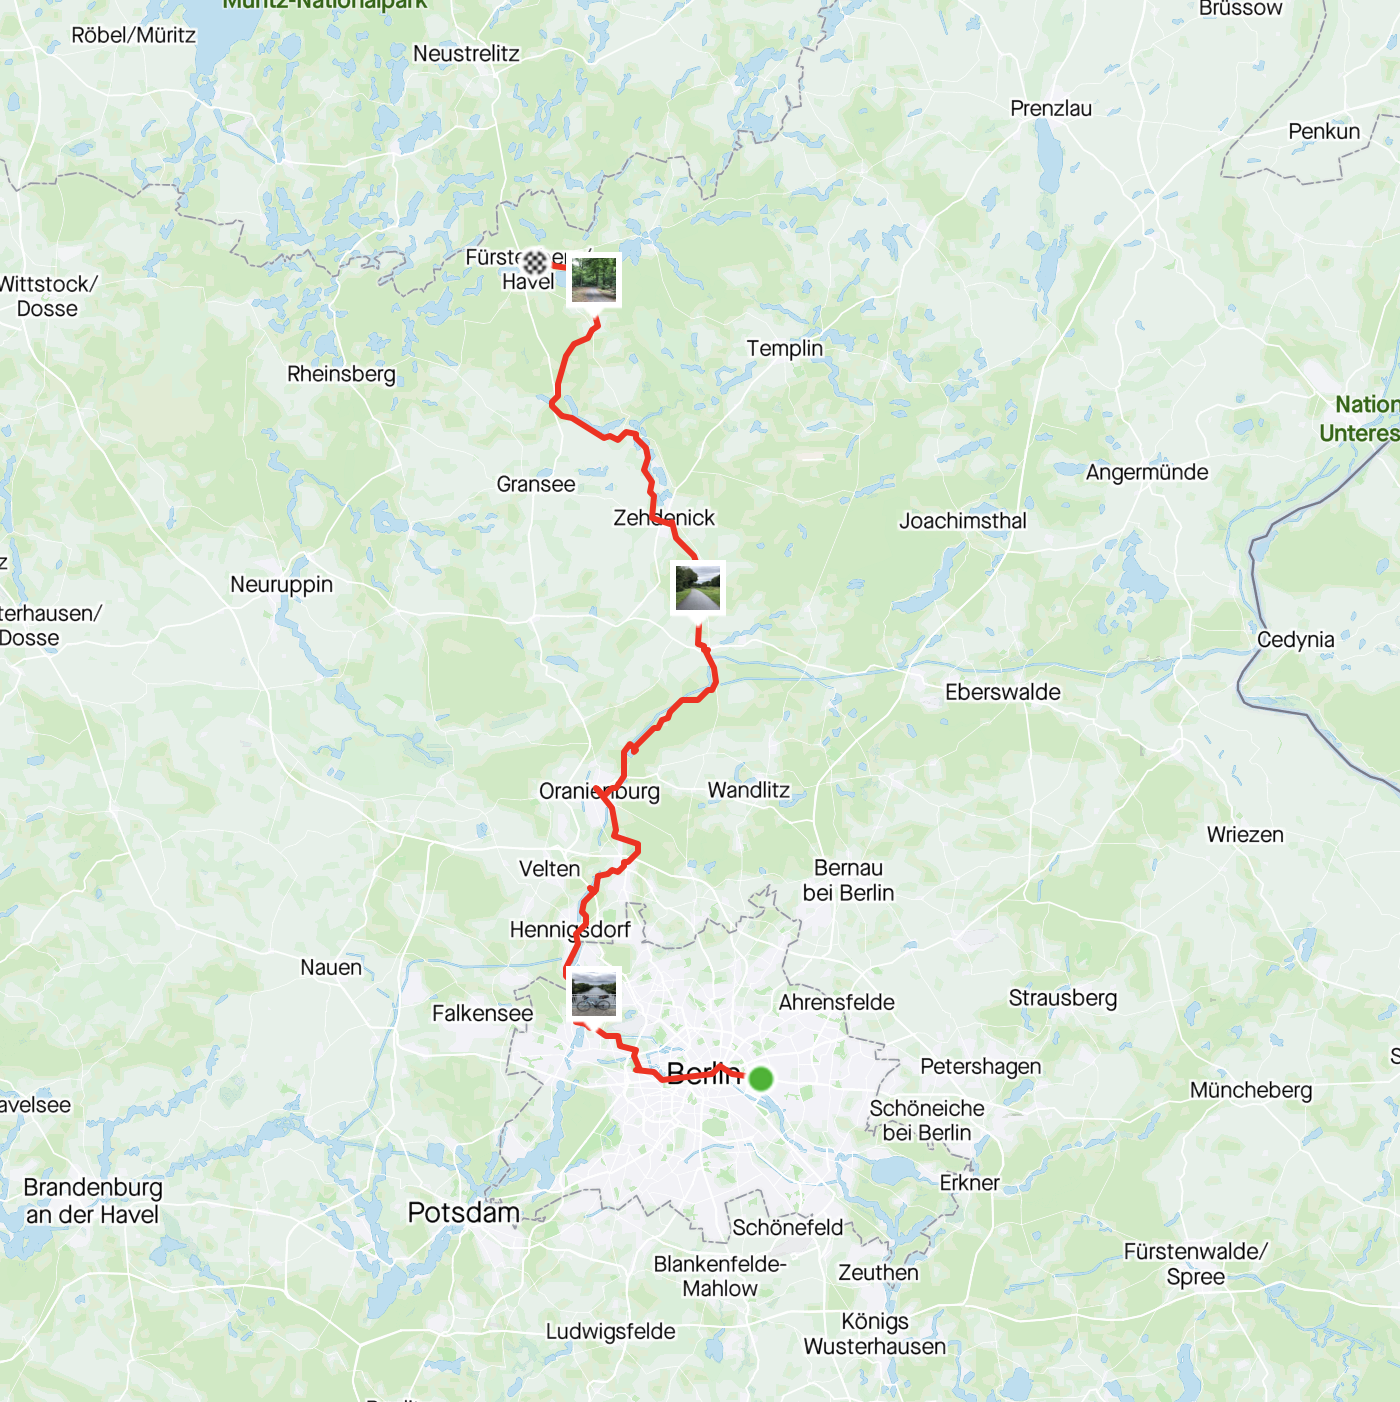 Day 1: 134 kilometers